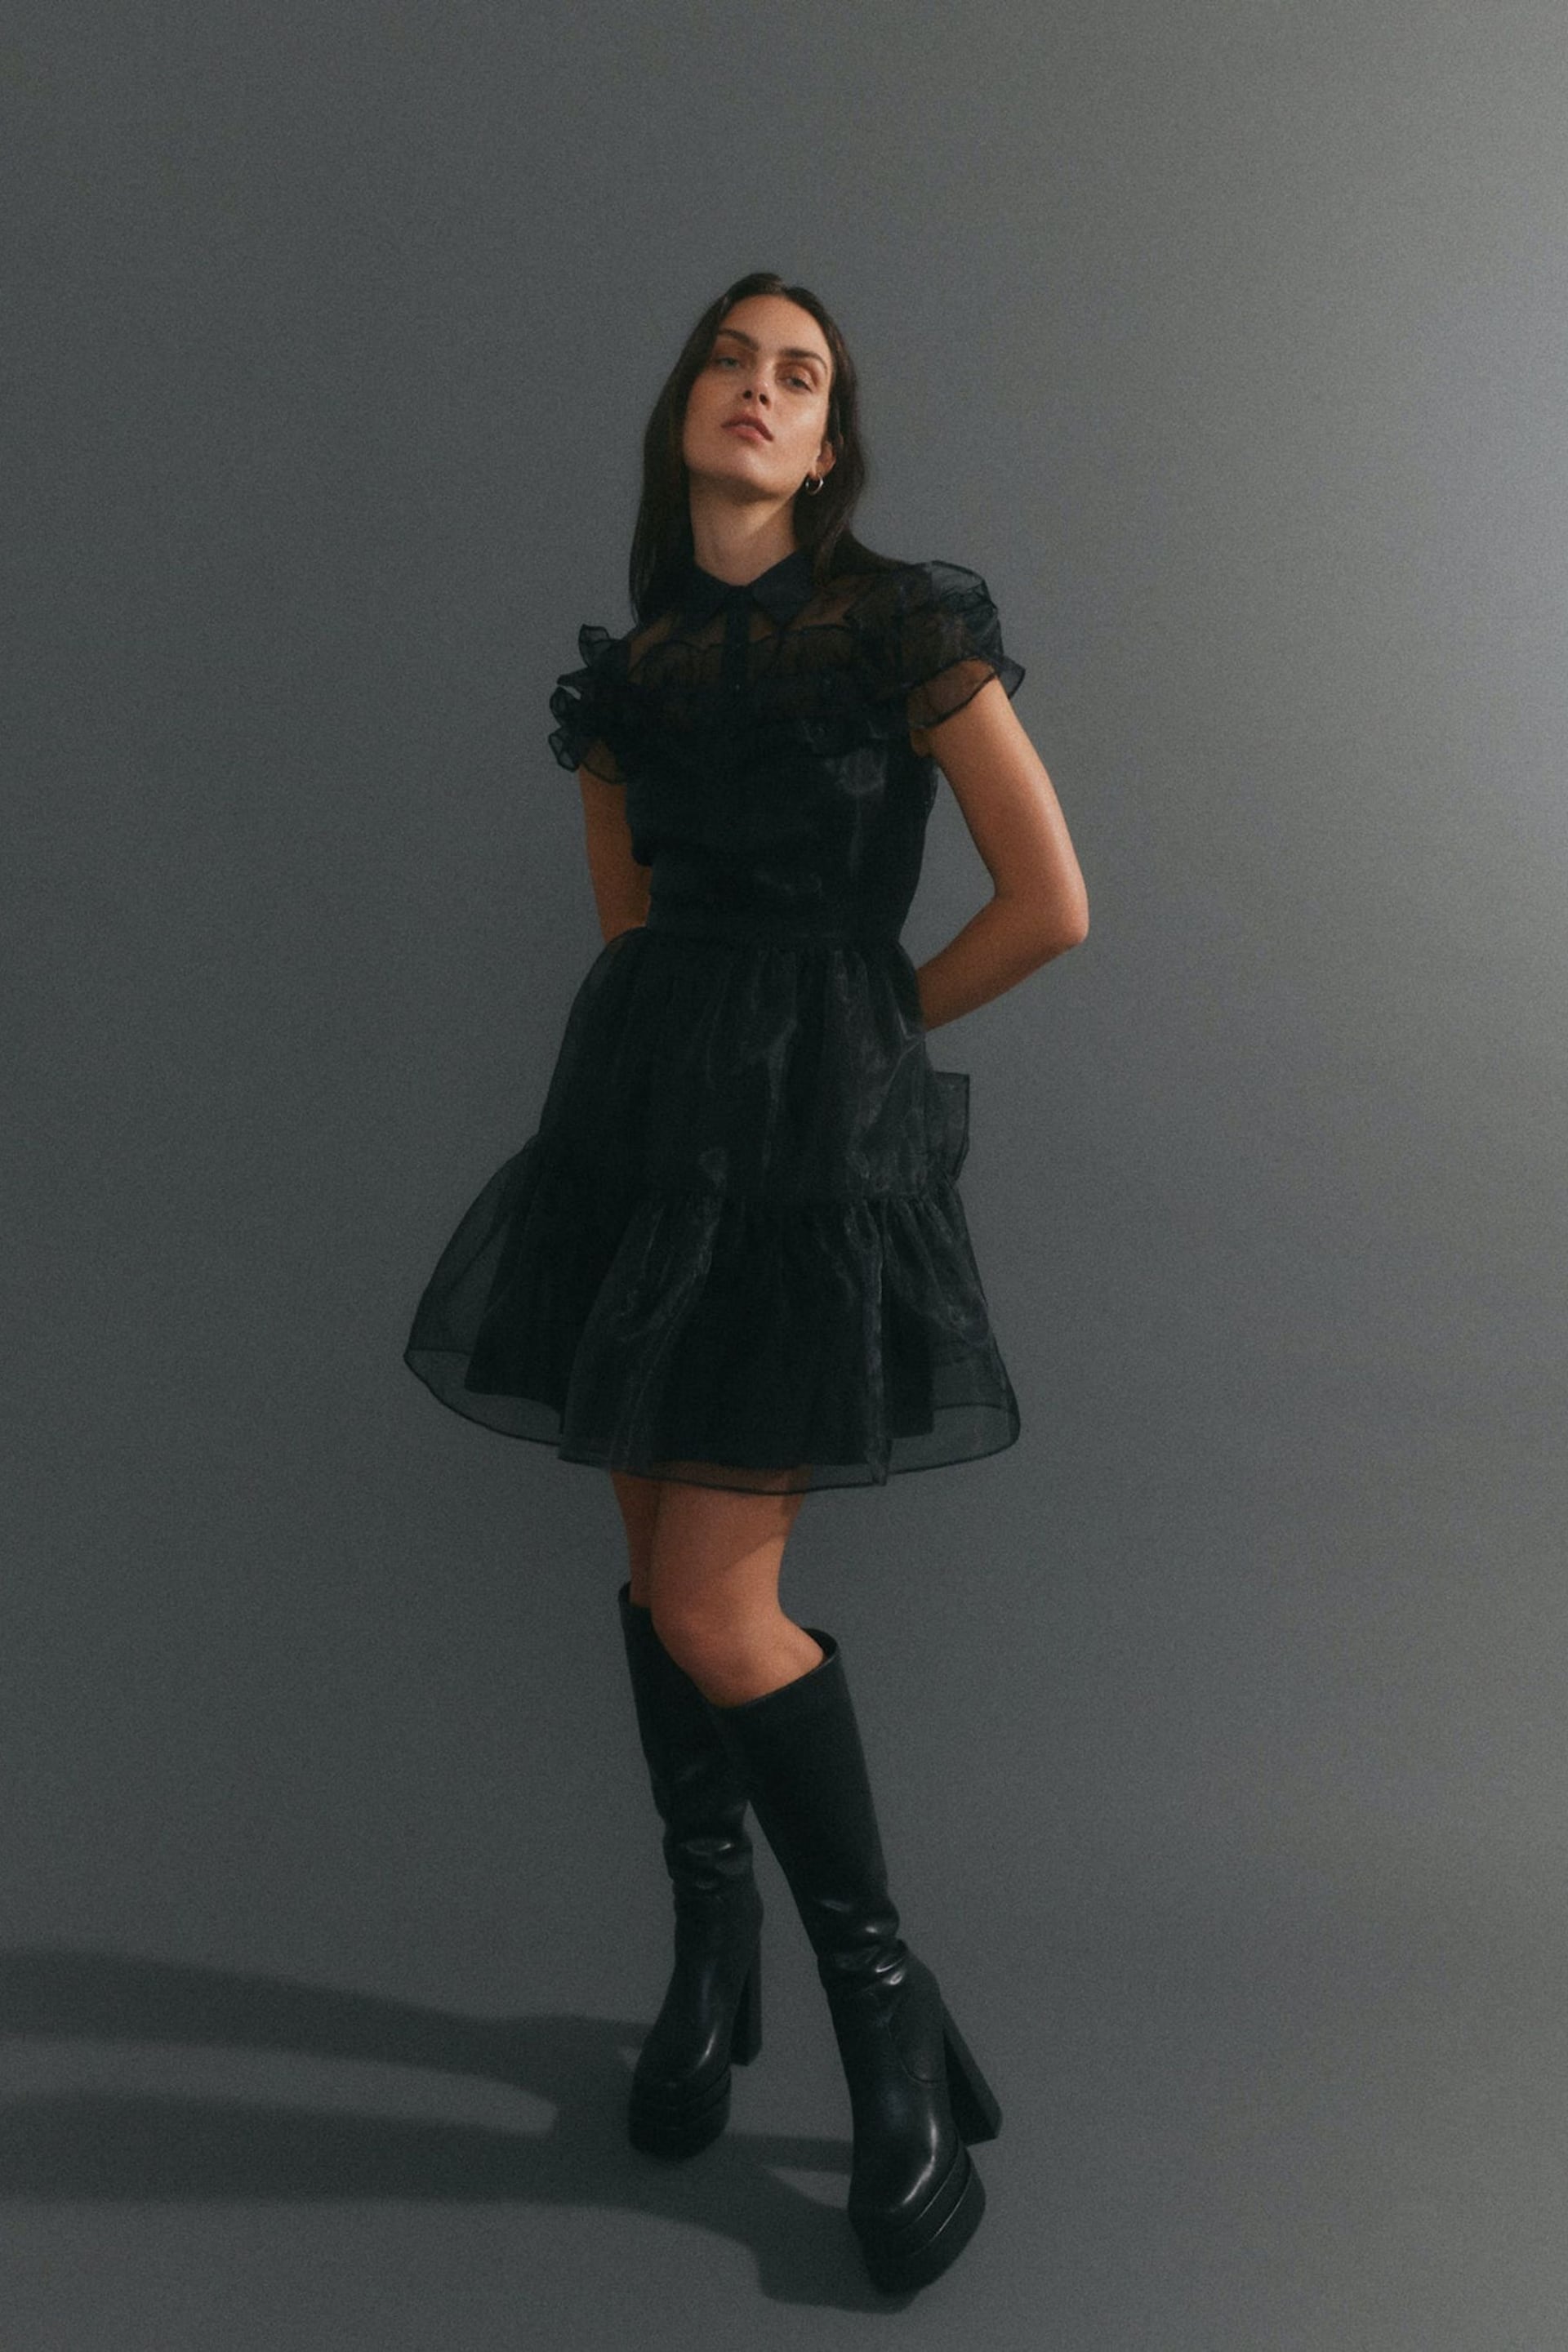 VERO MODA Black Mesh Ruffle Skater Party Dress - Image 1 of 7